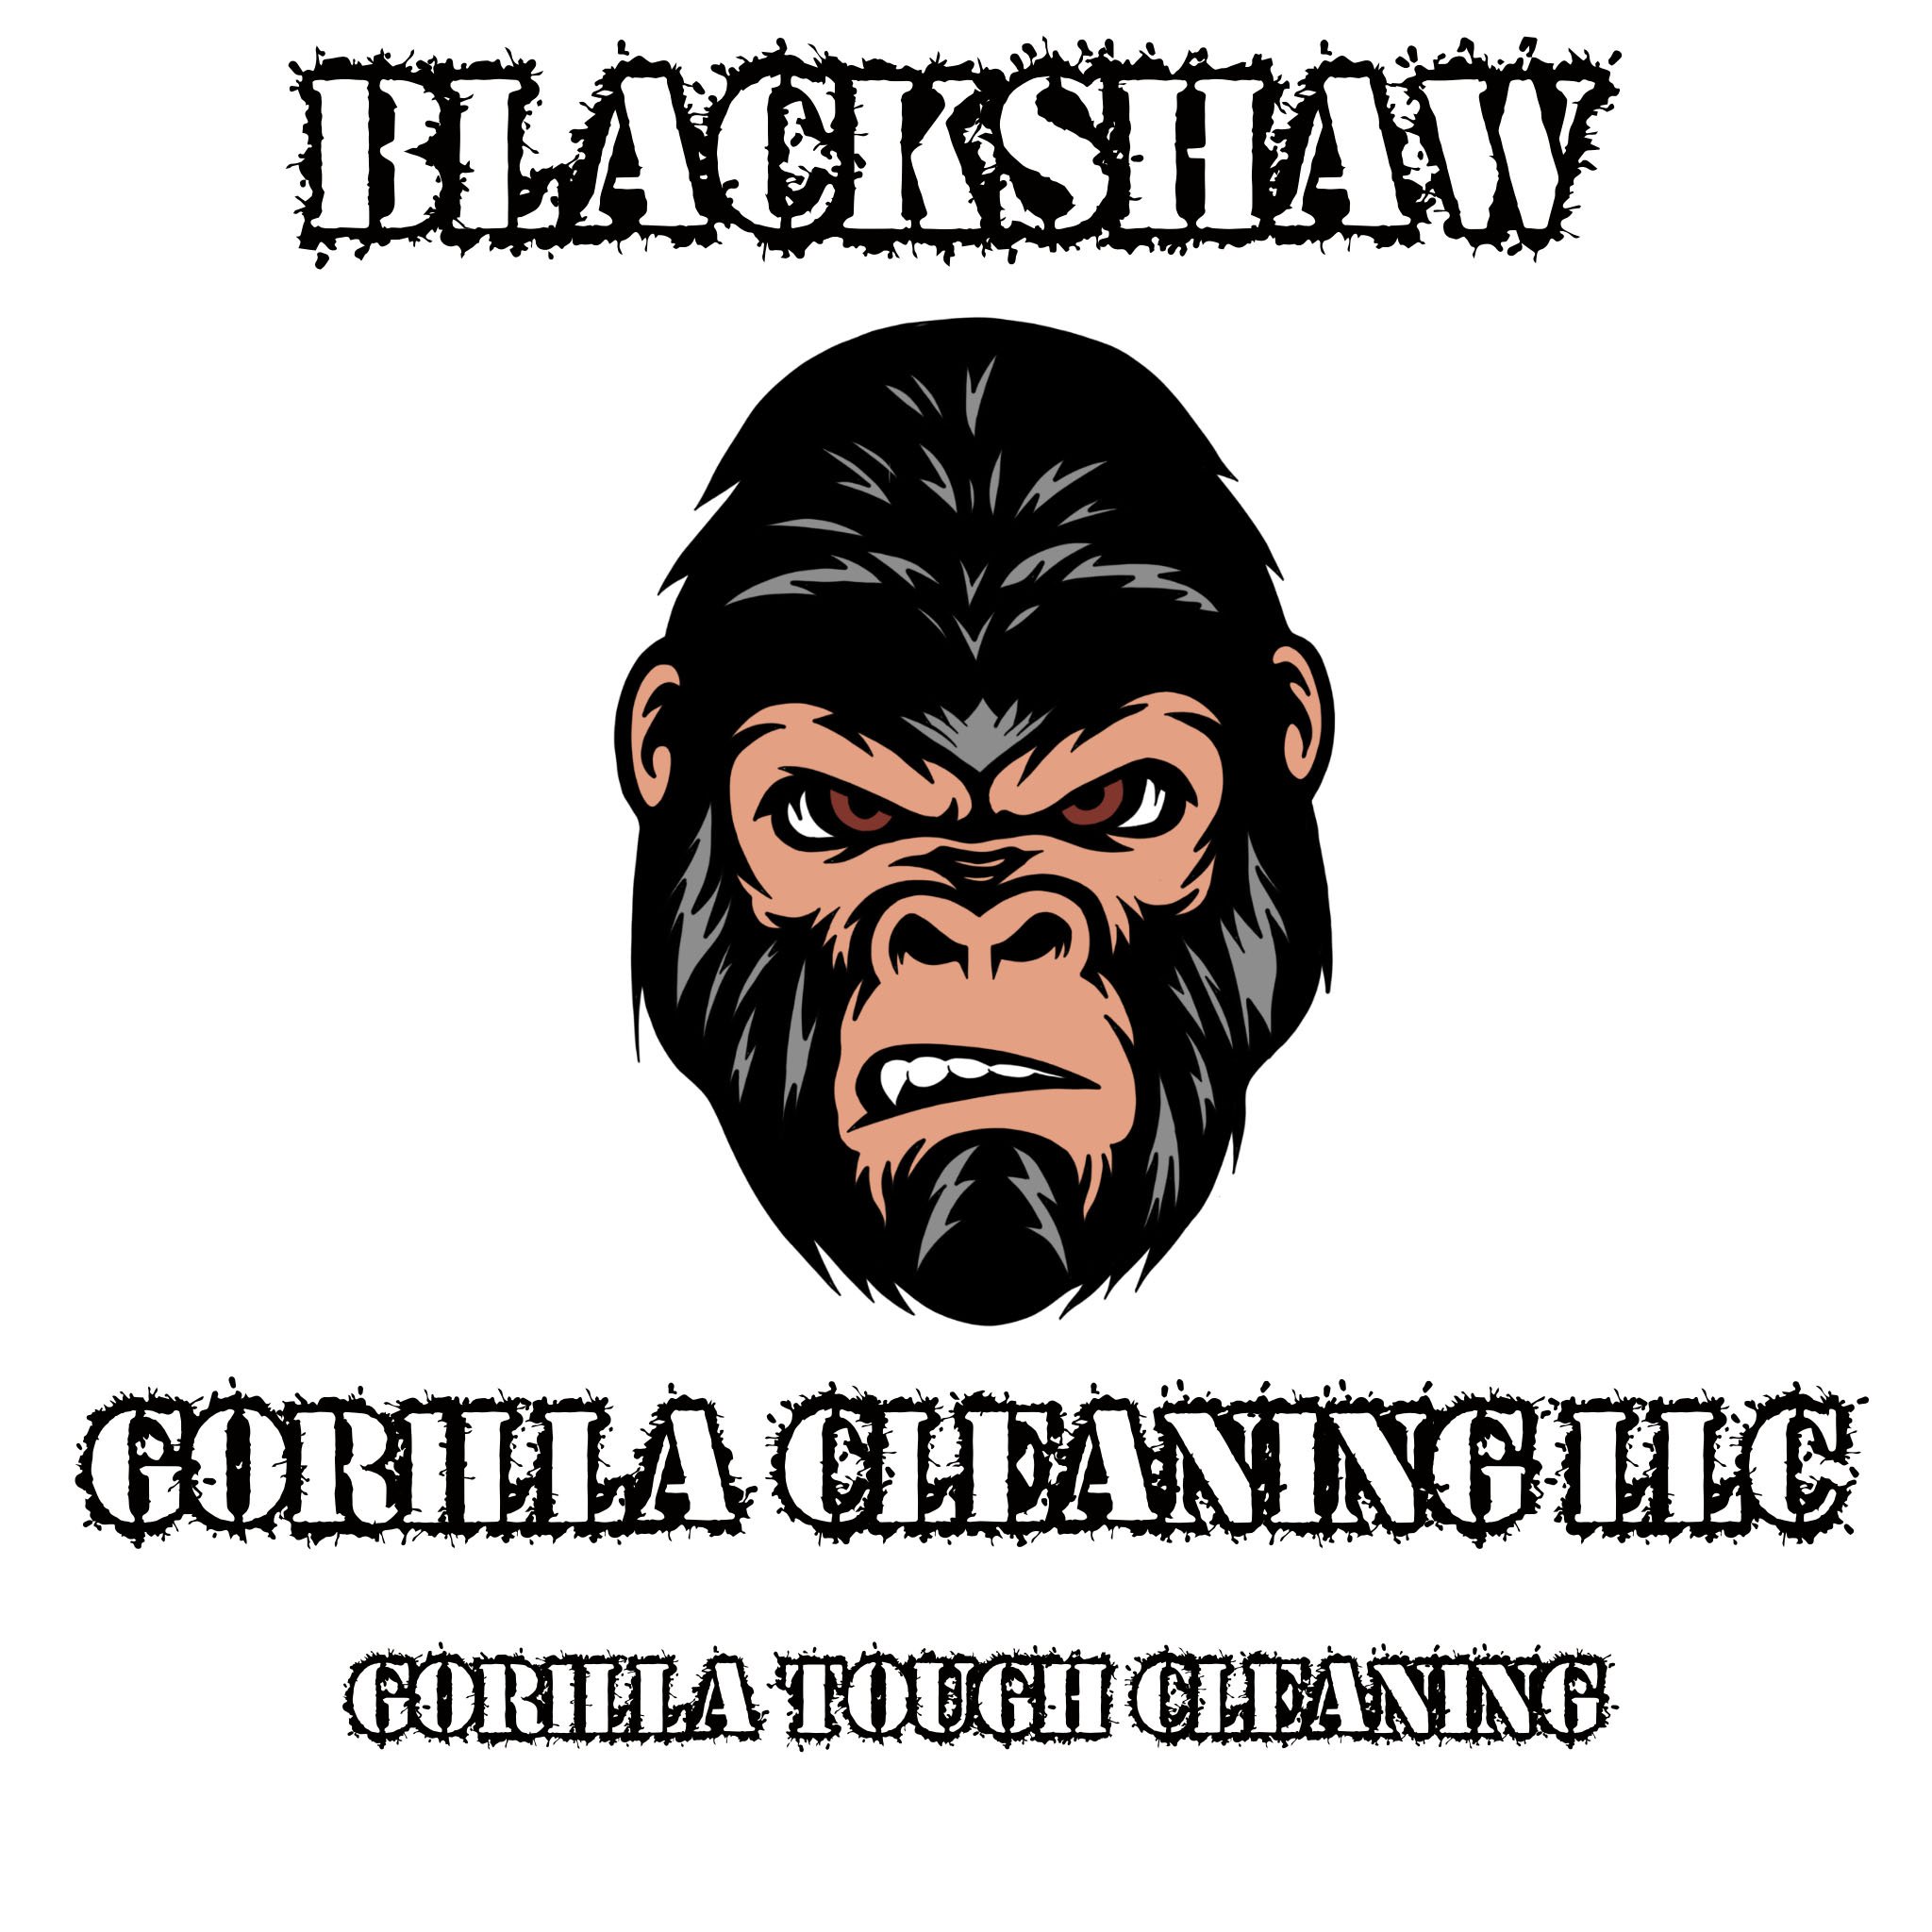 BlackShaw Gorilla Cleaning, LLC Logo